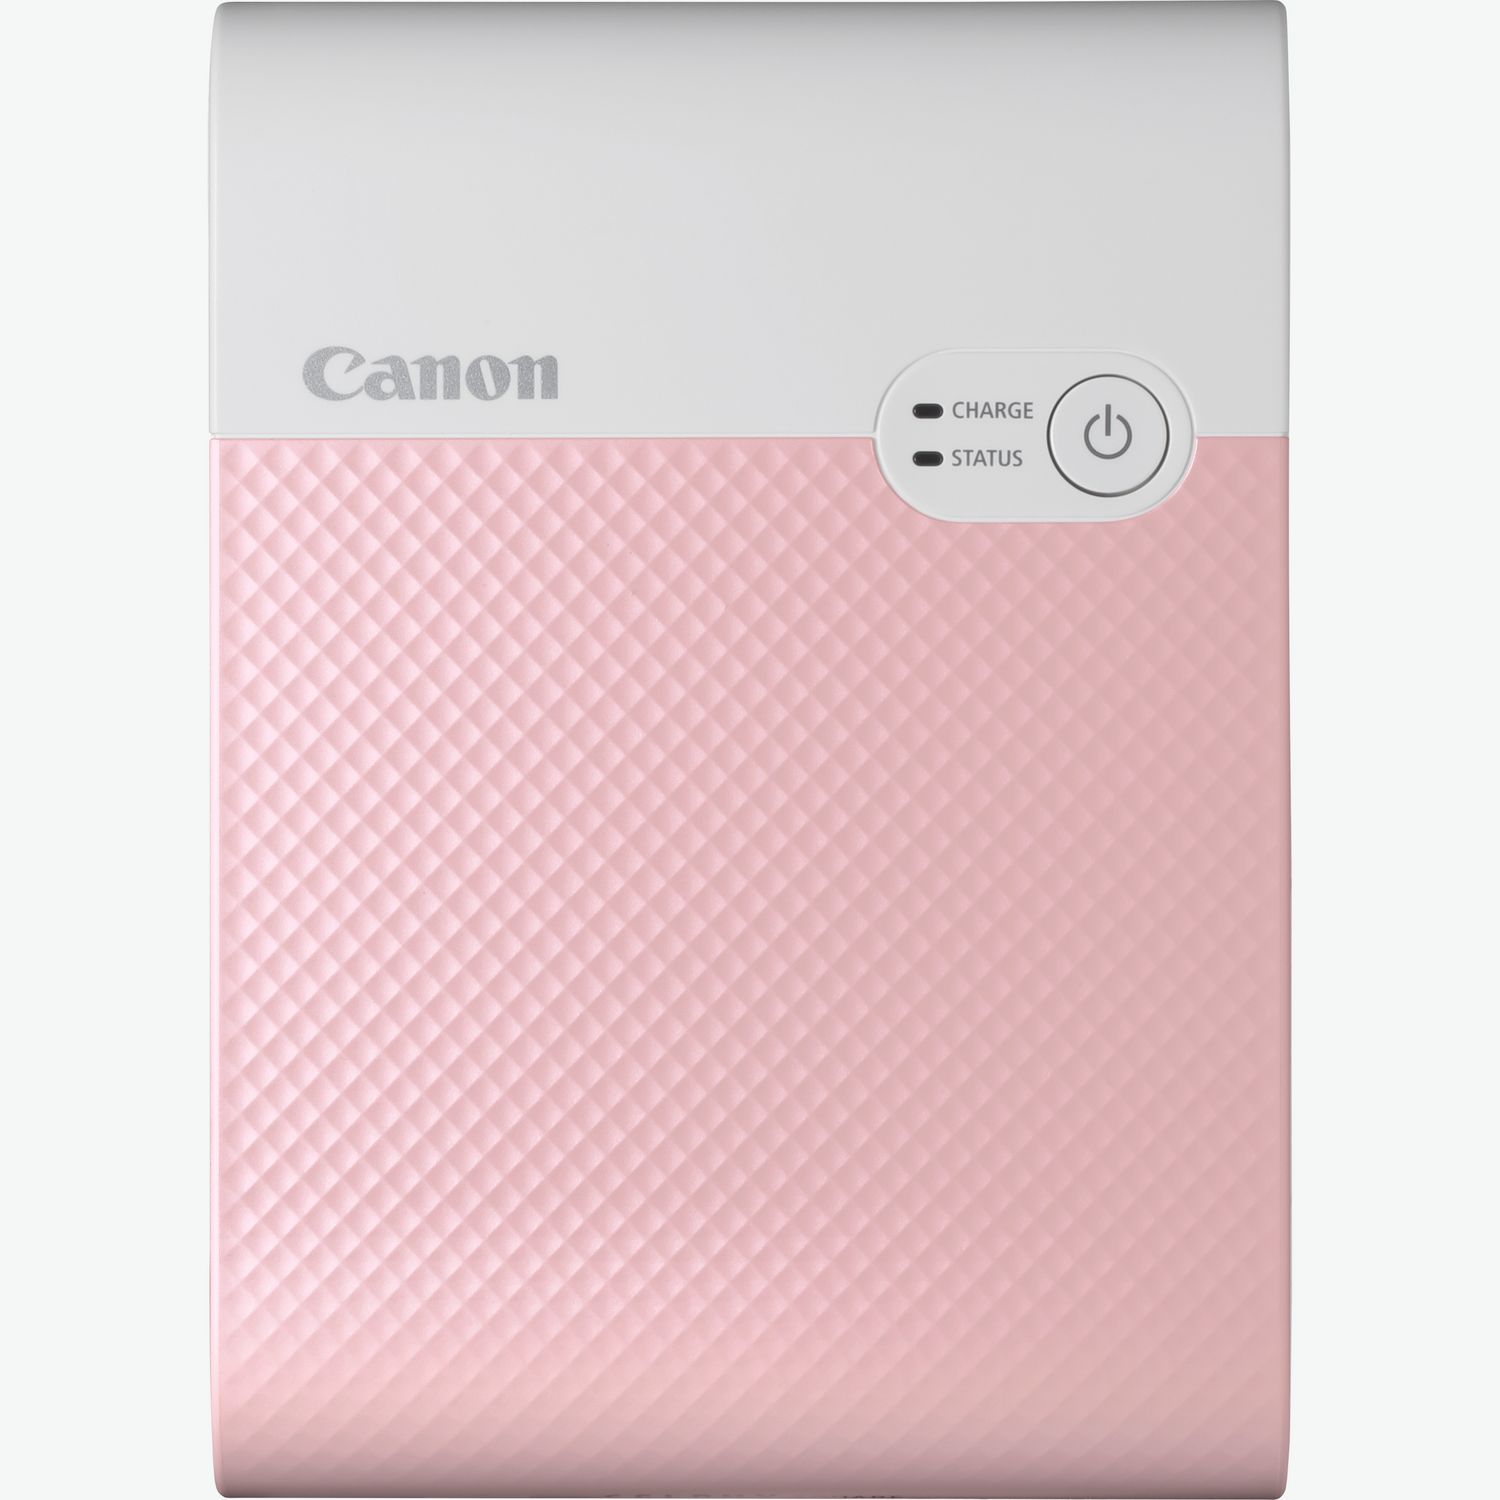 Canon - CANON Zoemini C Appareil photo instantane - 5 Mp - Rose Fushia -  Appareil compact - Rue du Commerce